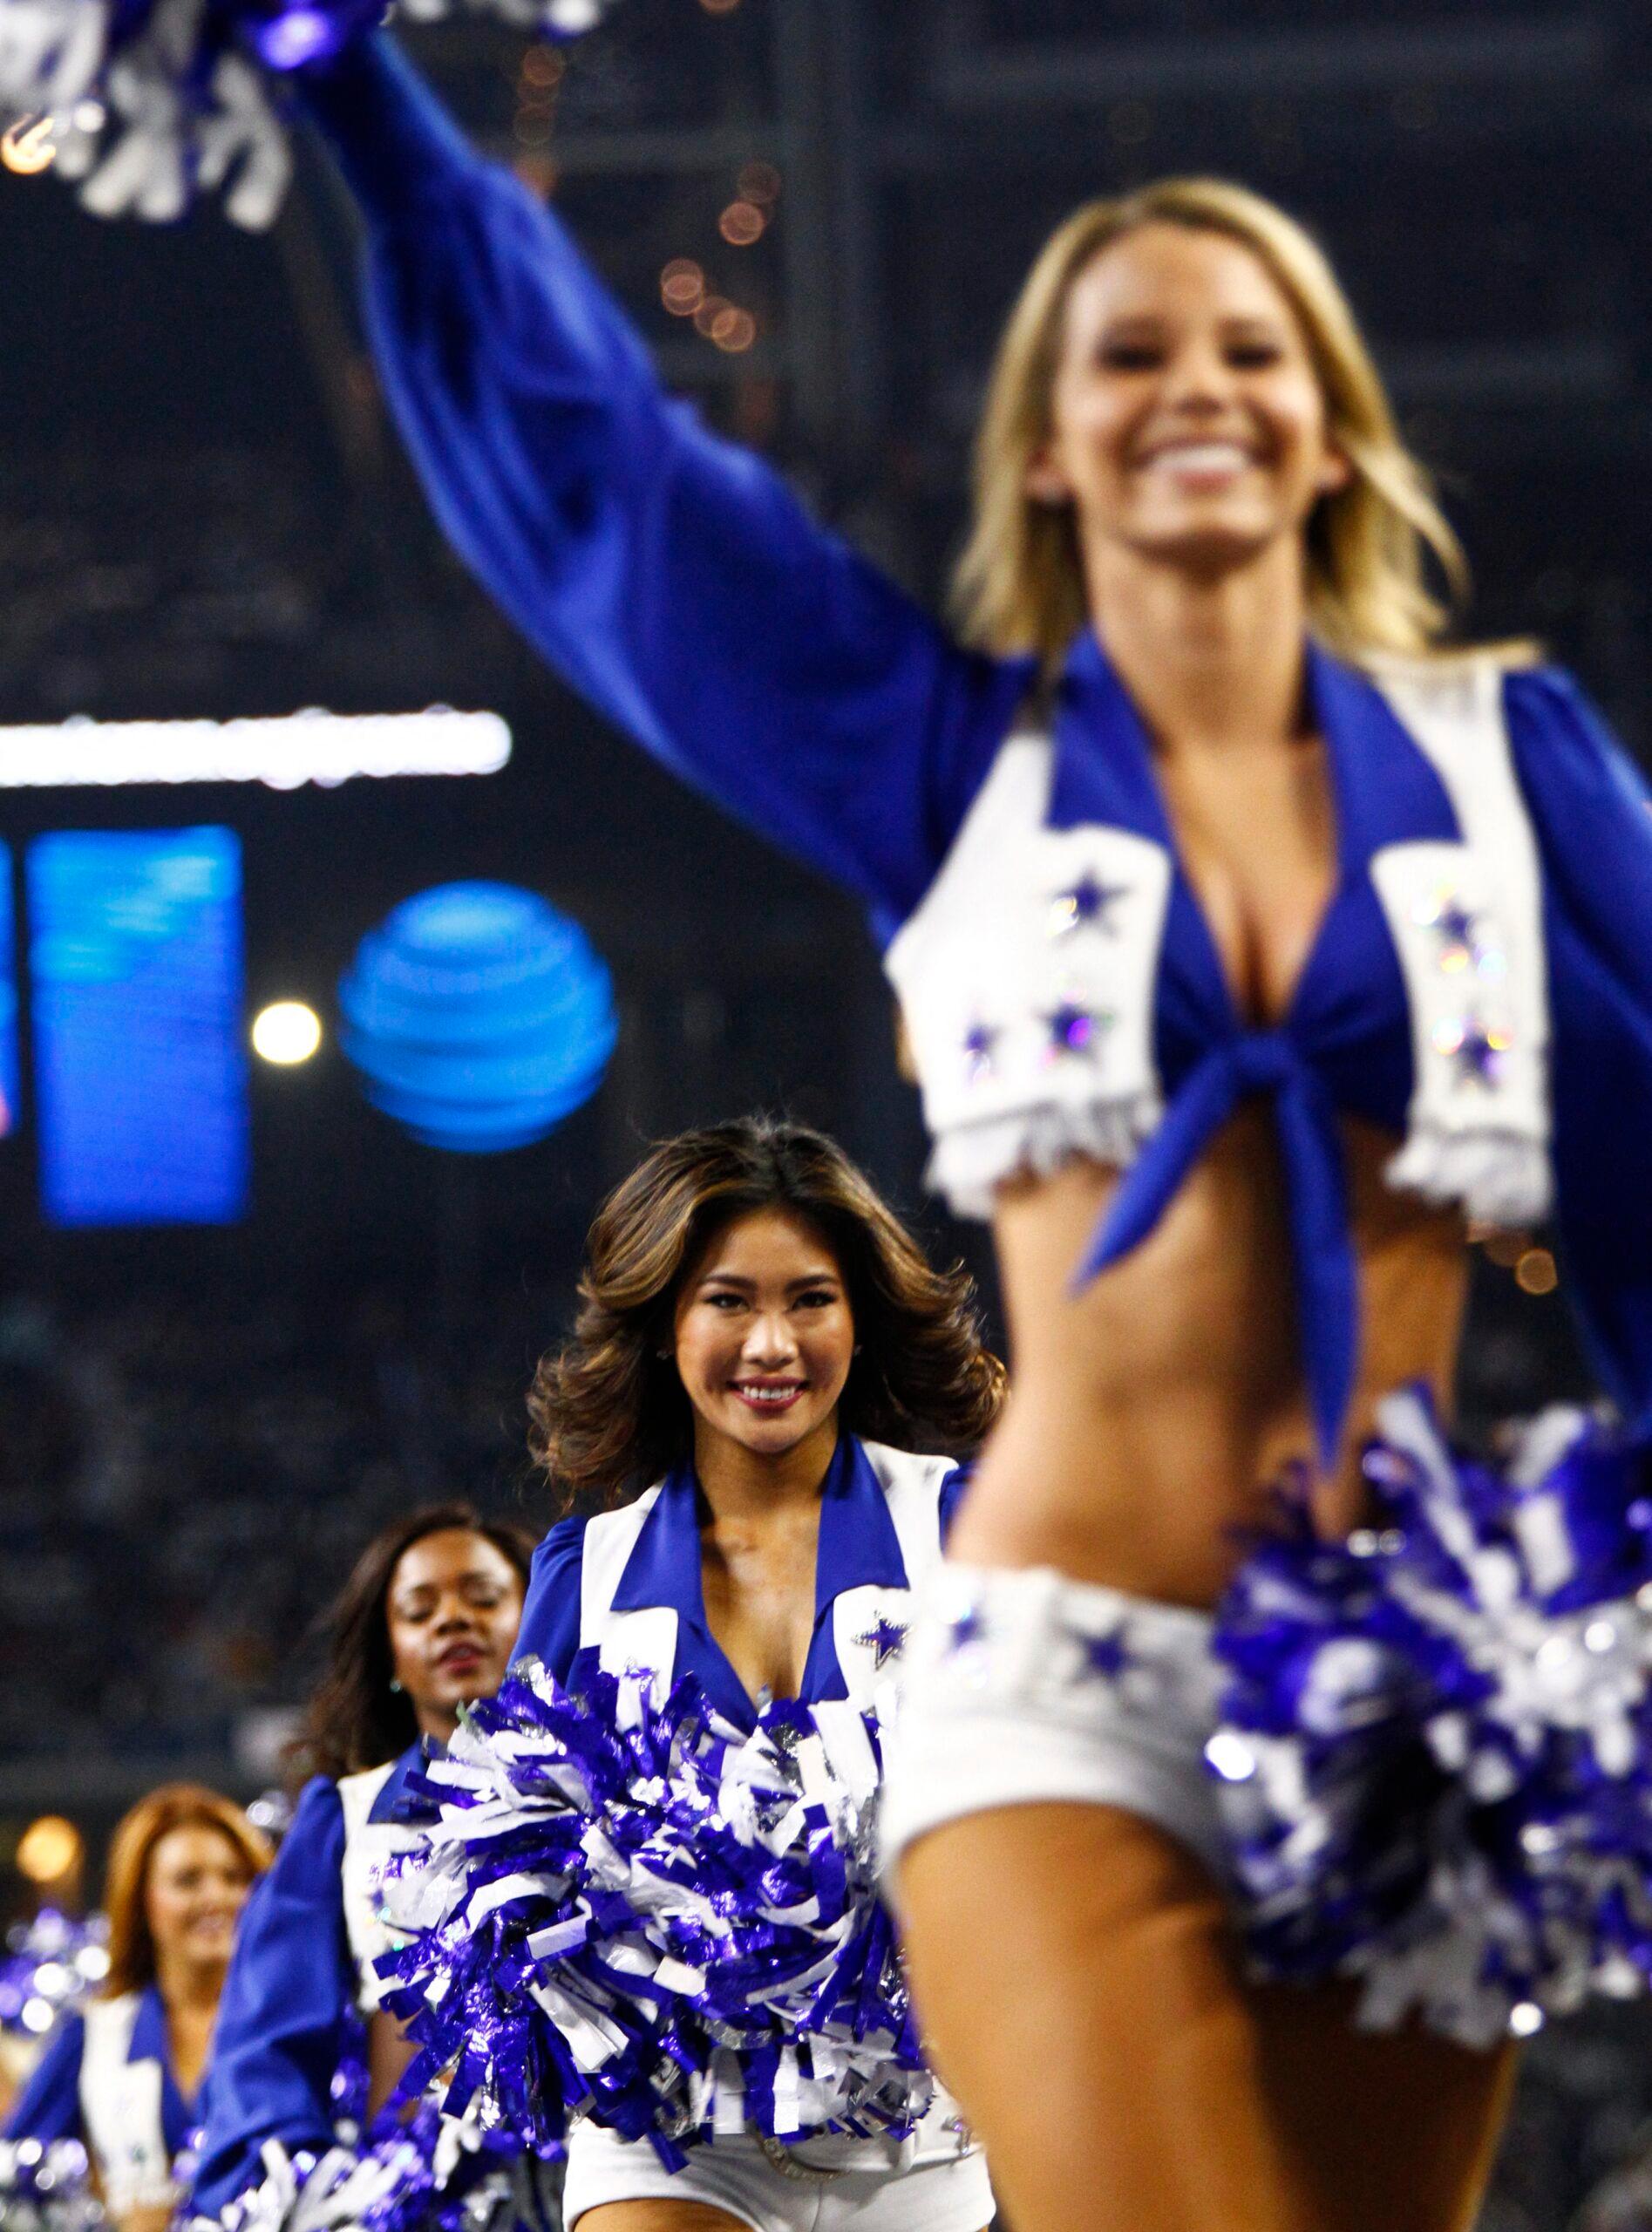 The Dallas Cowboys Cheerleaders perform at The Dallas Cowboys vs the Washington Redskins game